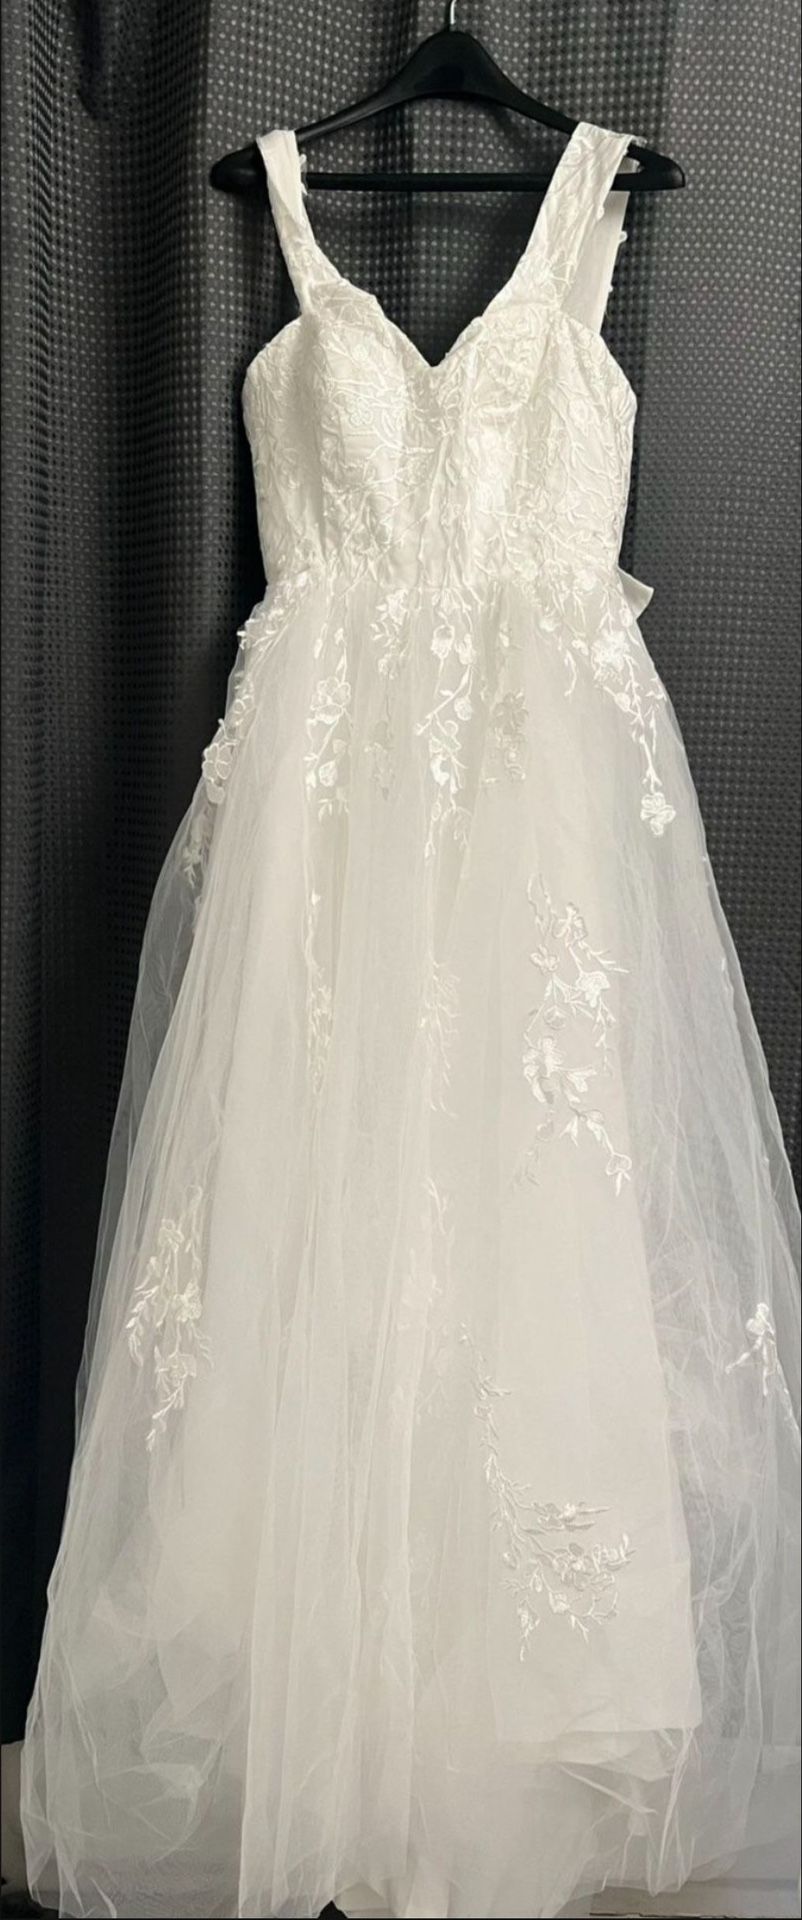 Lace Train Wedding Dress